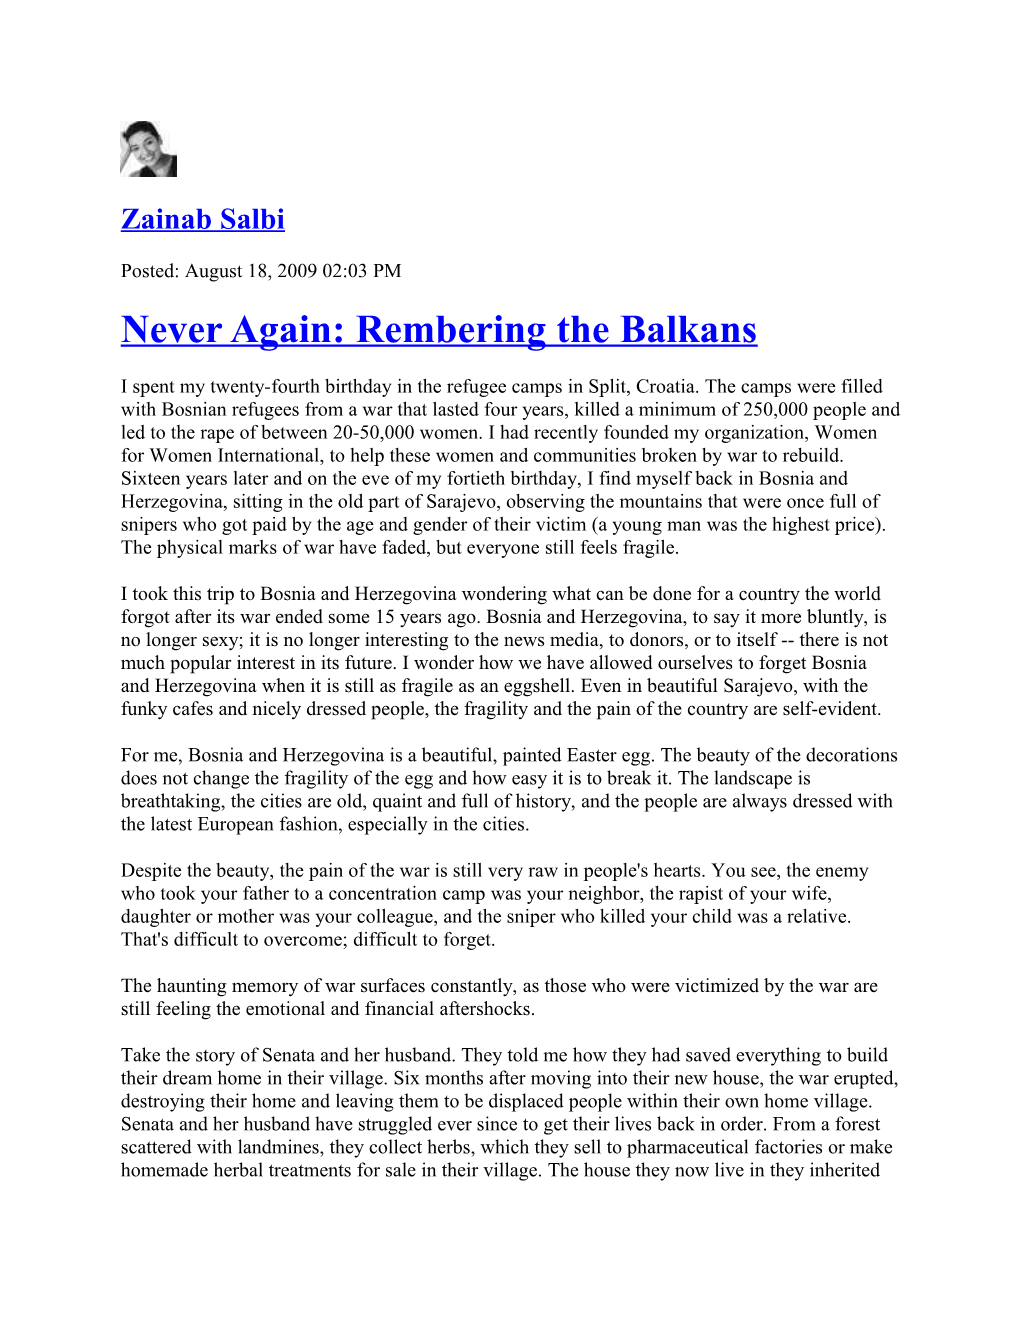 Never Again: Rembering the Balkans